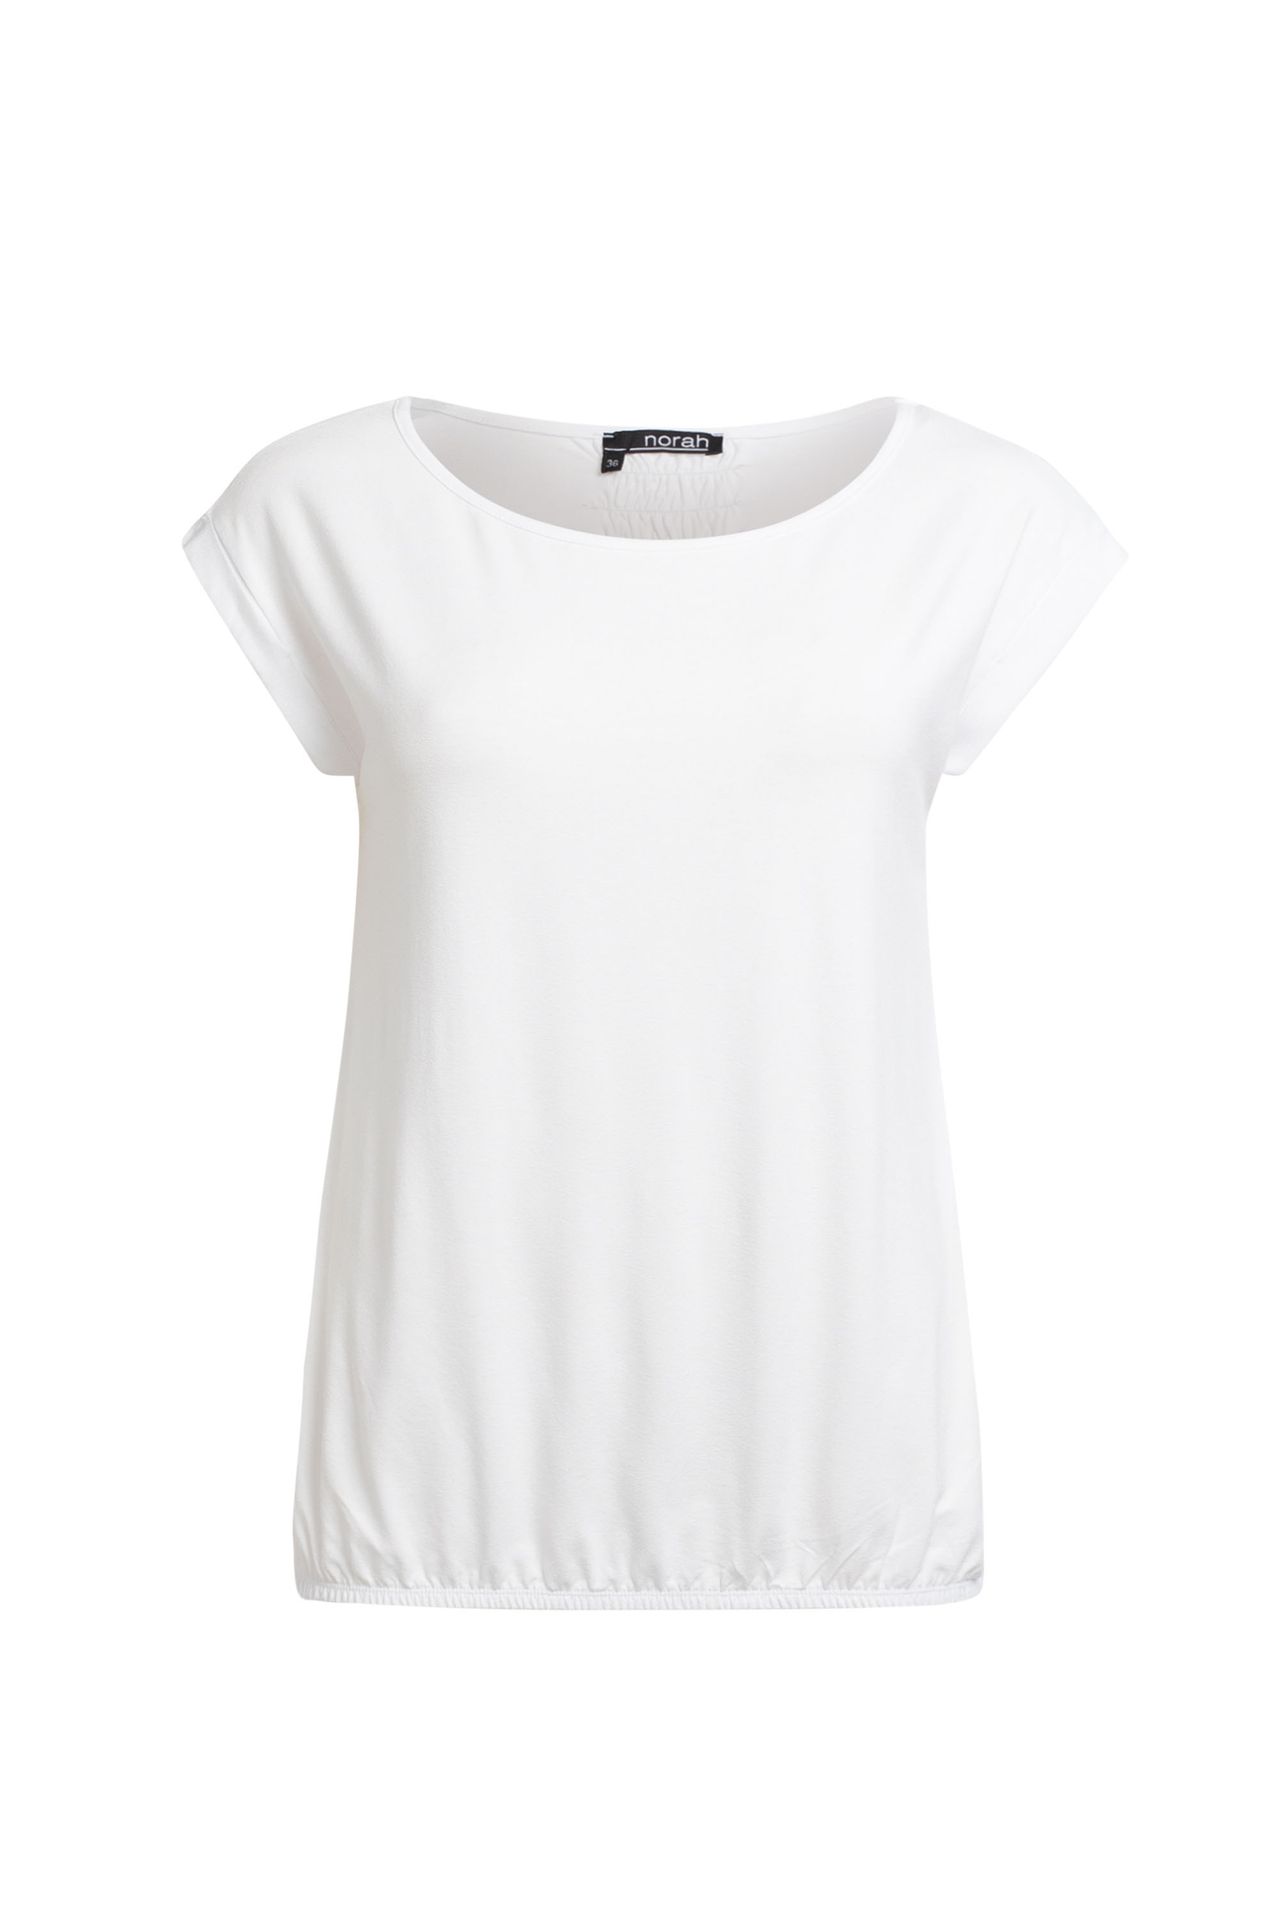 Norah Shirt Marije wit white 203656-100